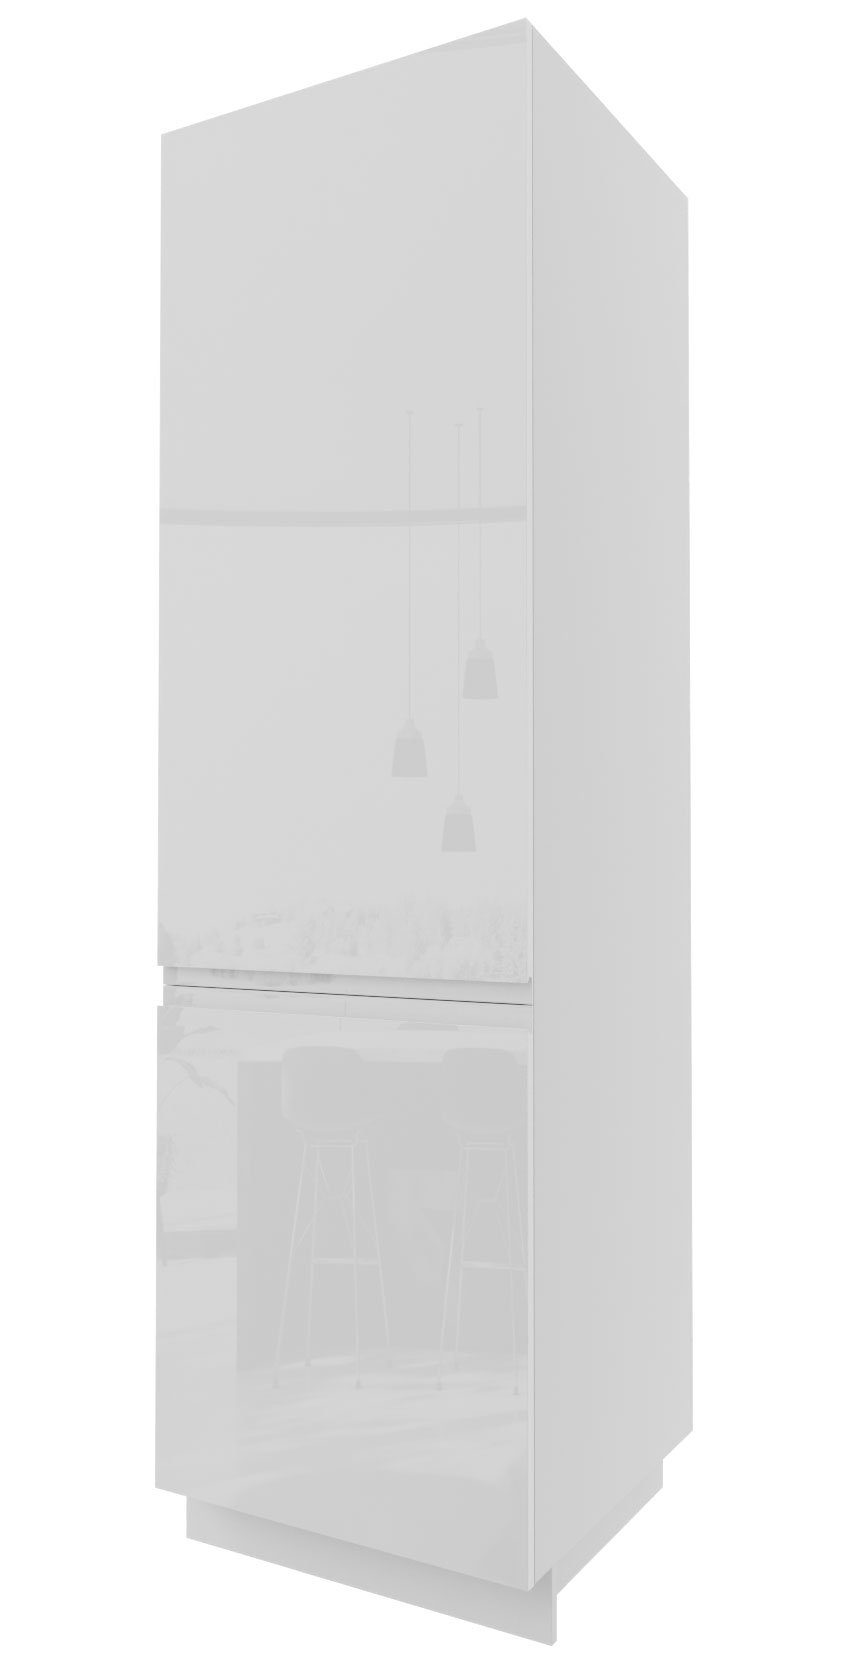 Feldmann-Wohnen Kühlumbauschrank Florence (Florence) 60cm Front-, Korpusfarbe und Ausführung wählbar grifflos 2-türig RAL 9018 papyrusweiß Hochglanz